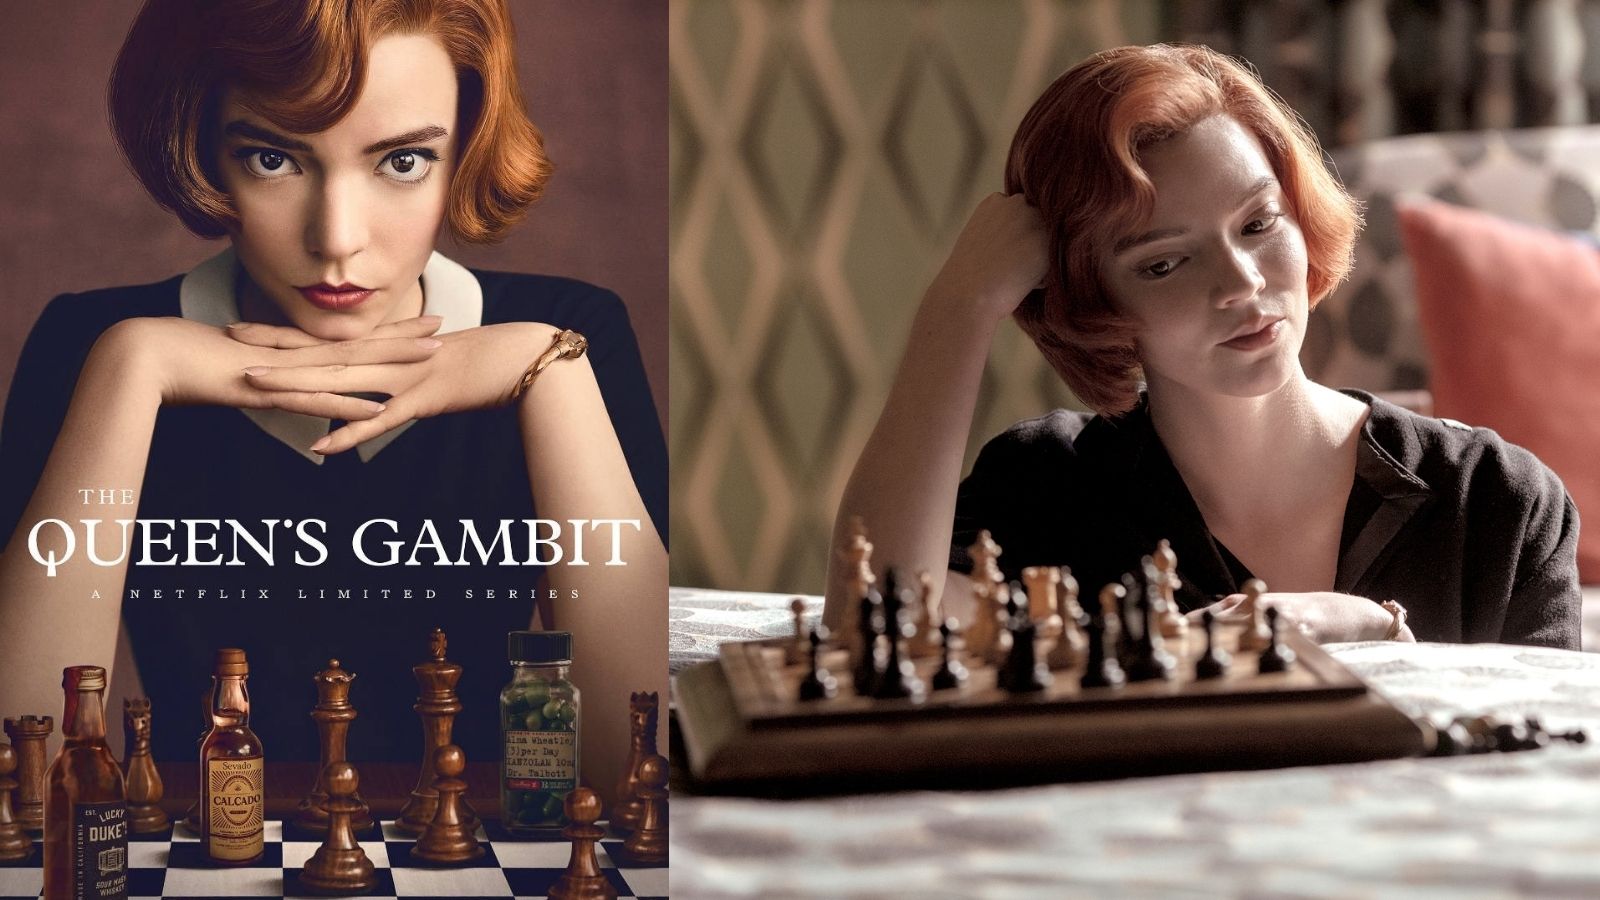 The Queen's Gambit Streaming On Netflix